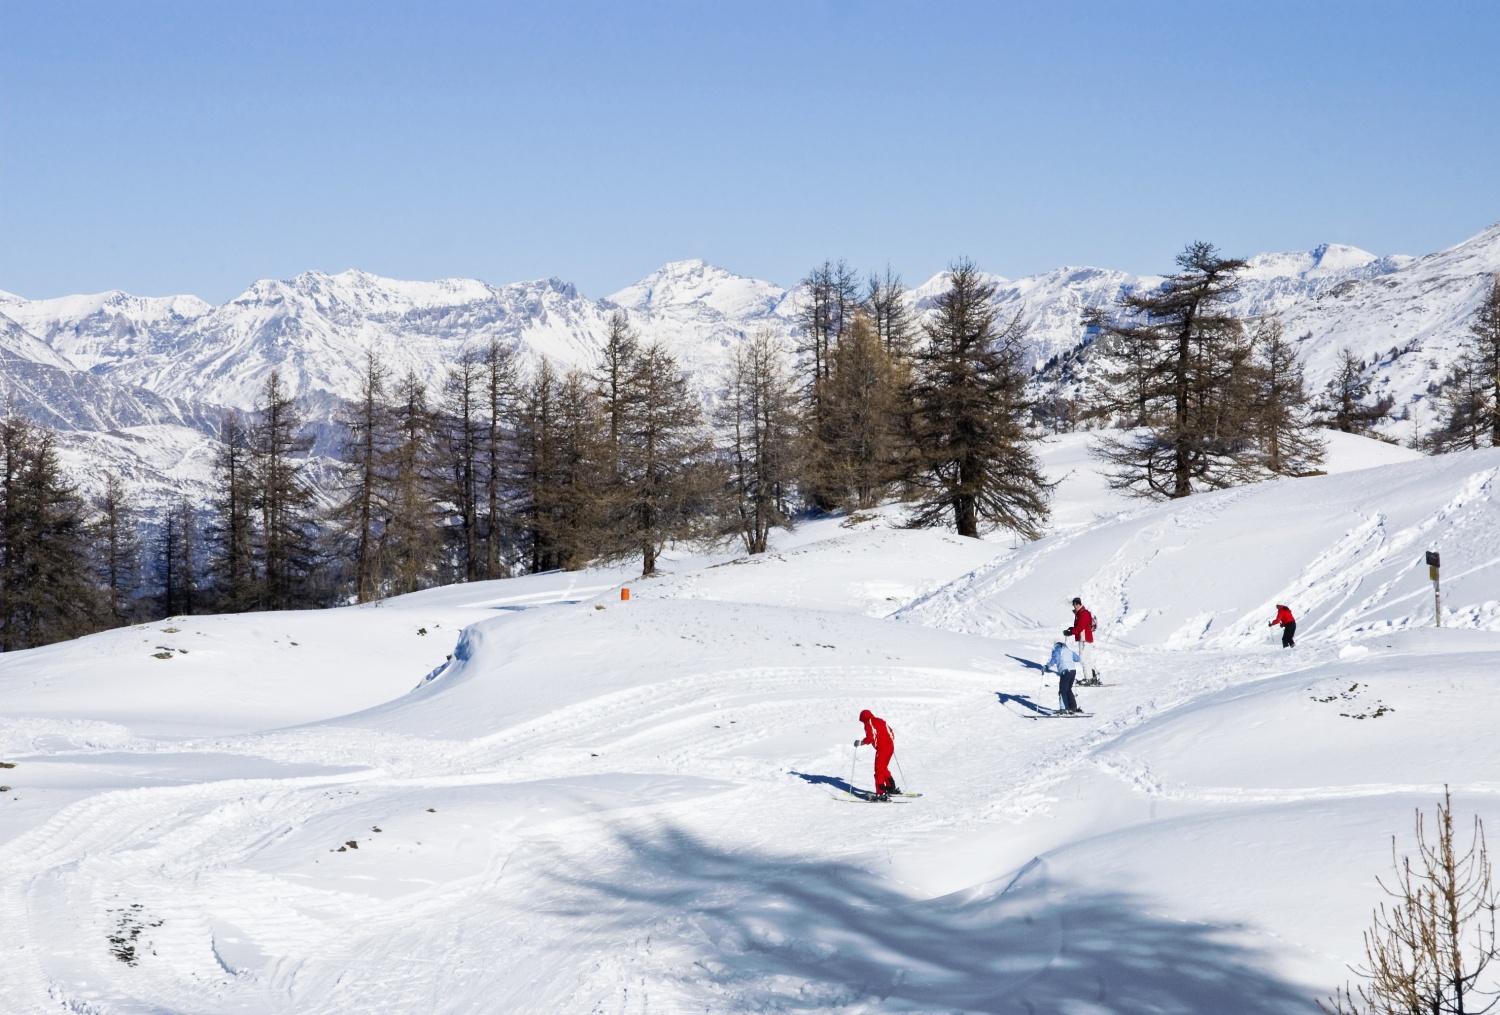 Sauze DOulx ski resort Italy CREDIT istock